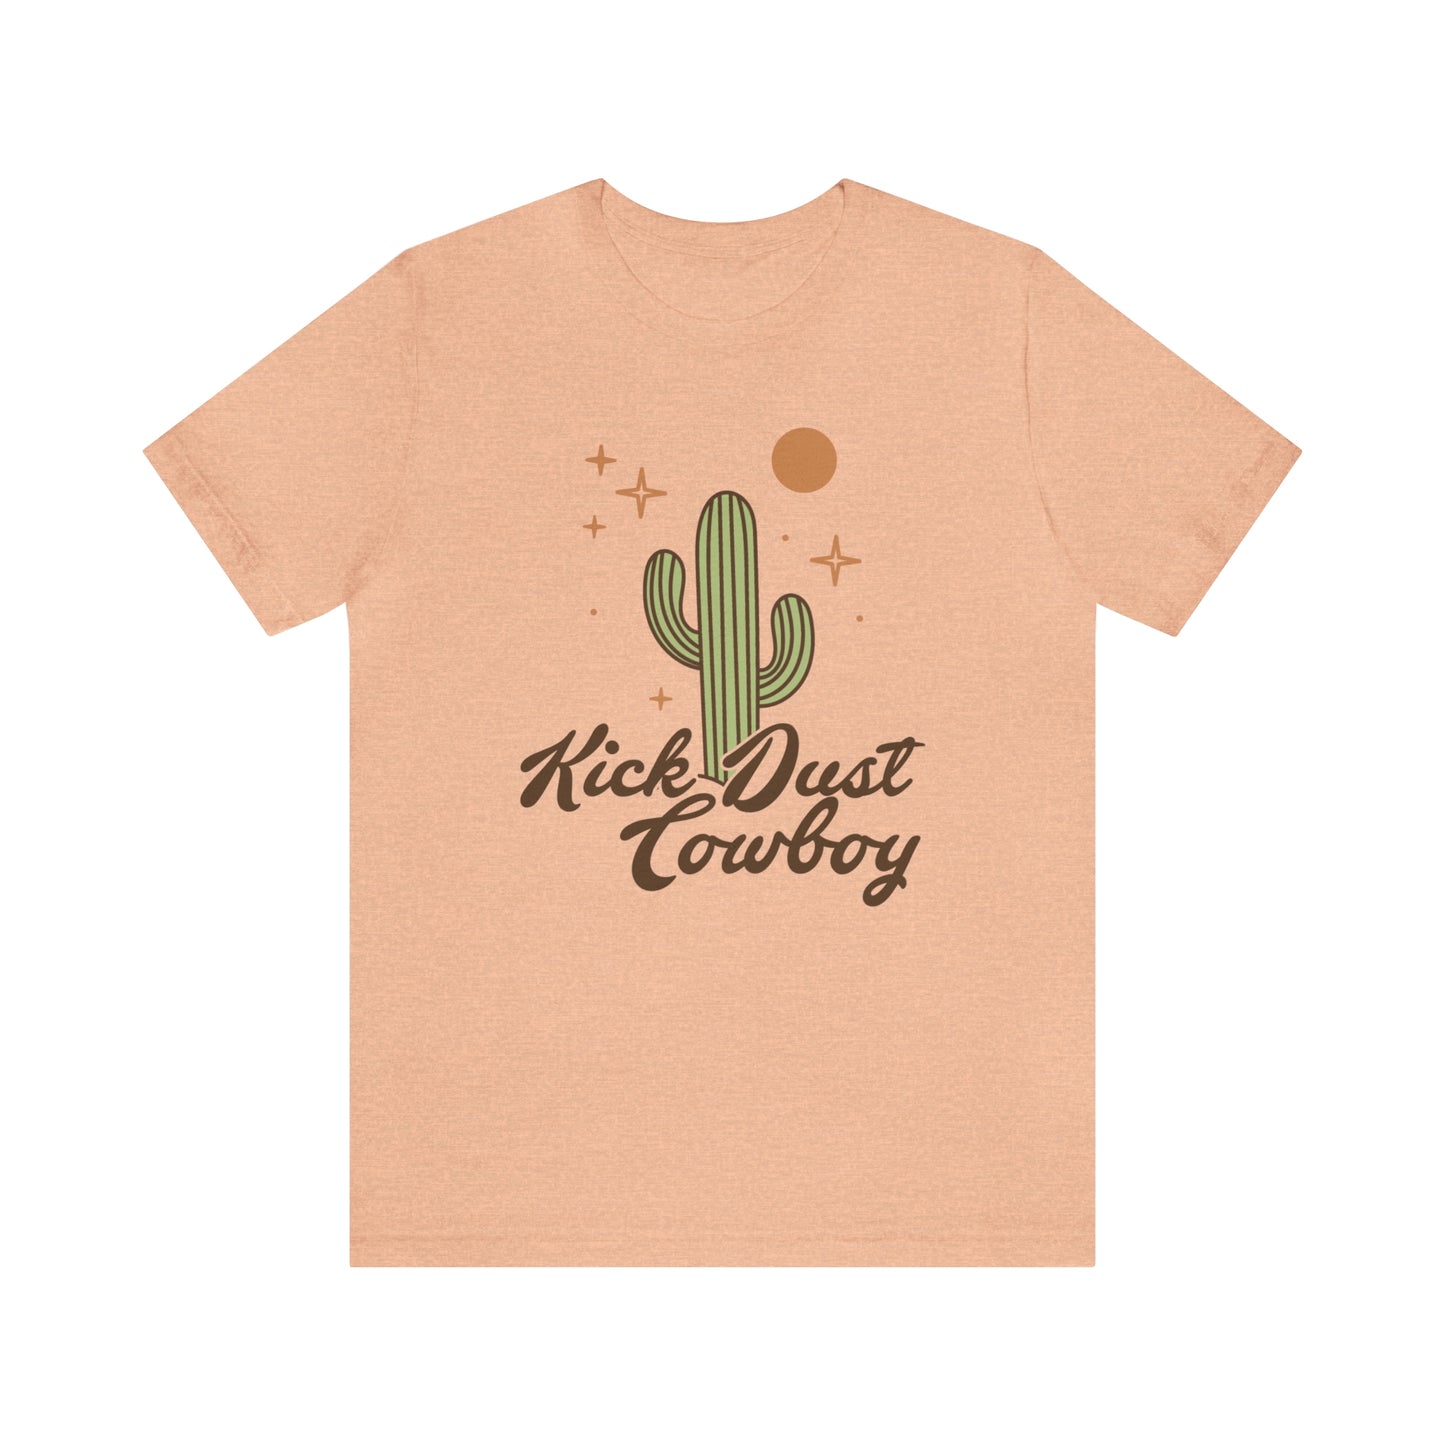 "Kick Dust Cowboy" Bella Canvas Short Sleeve Tee